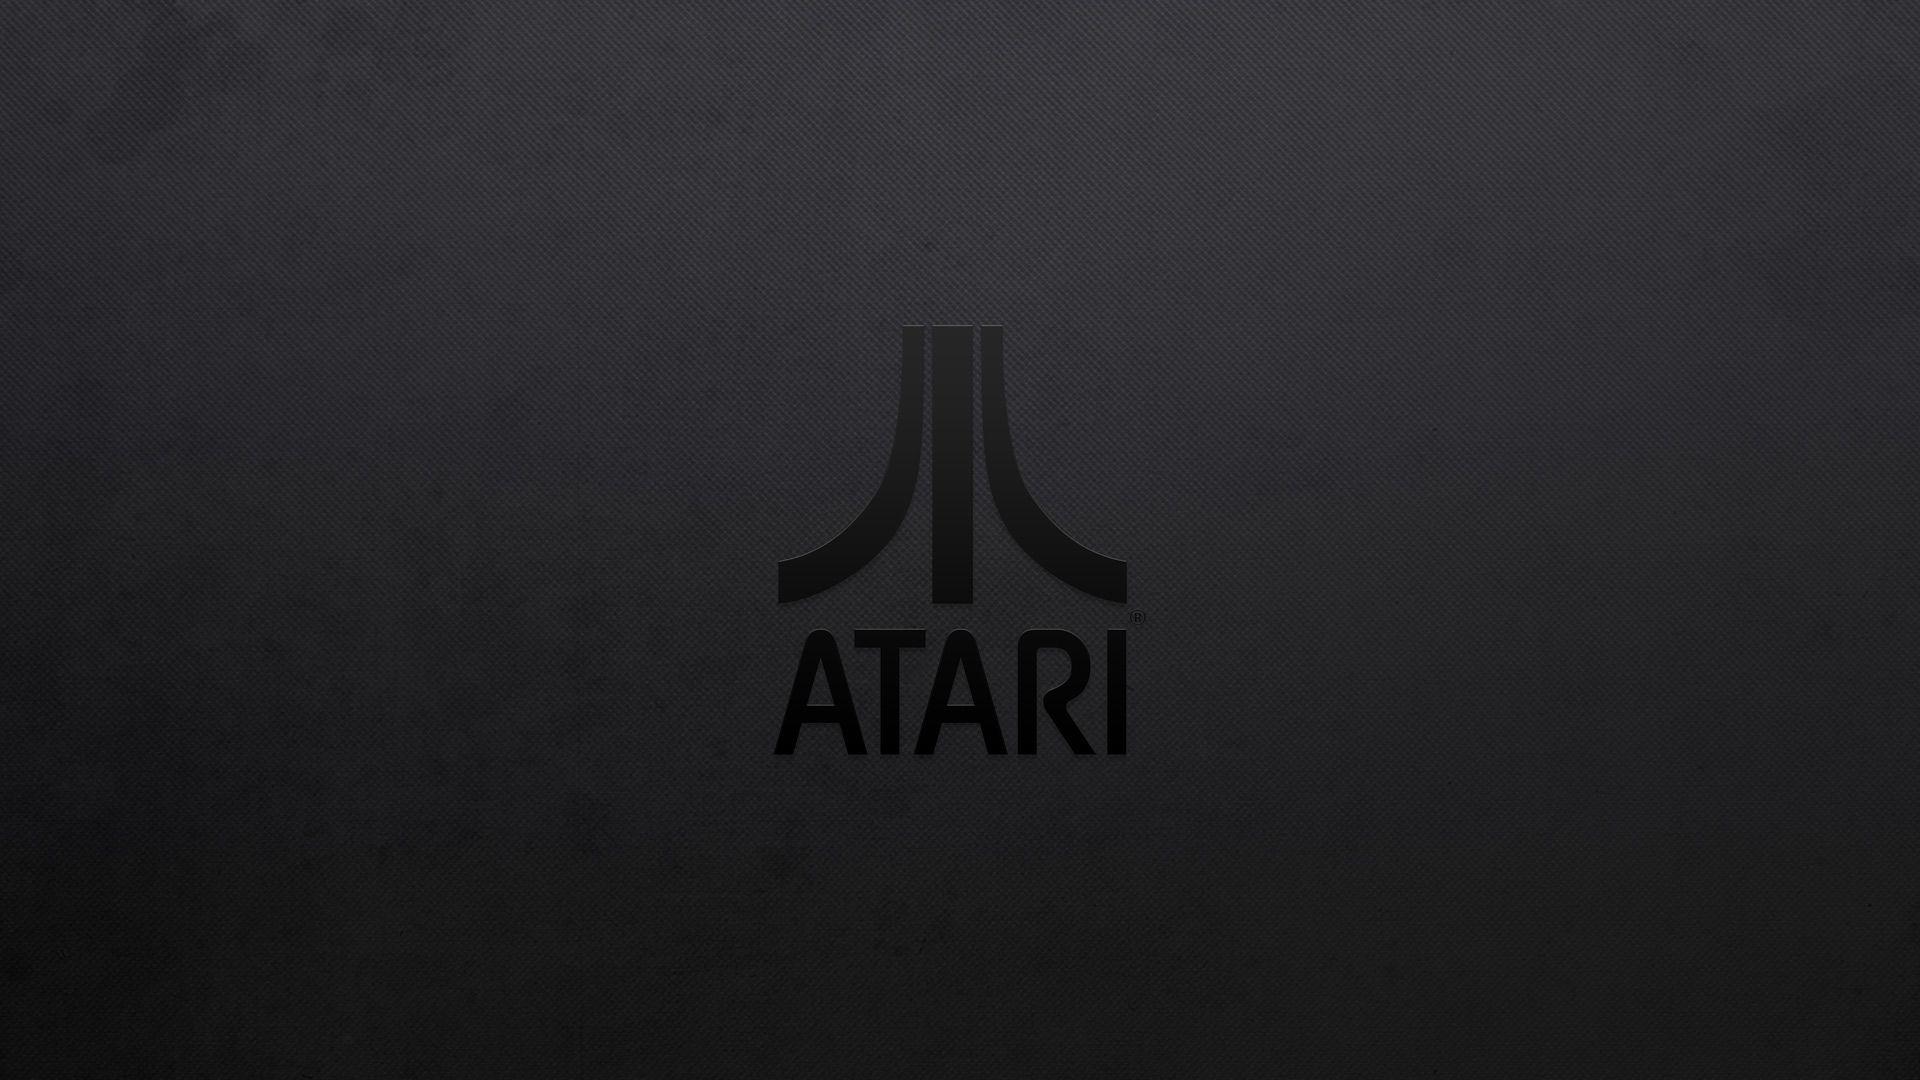 Atari HD Wallpaper and Background Image